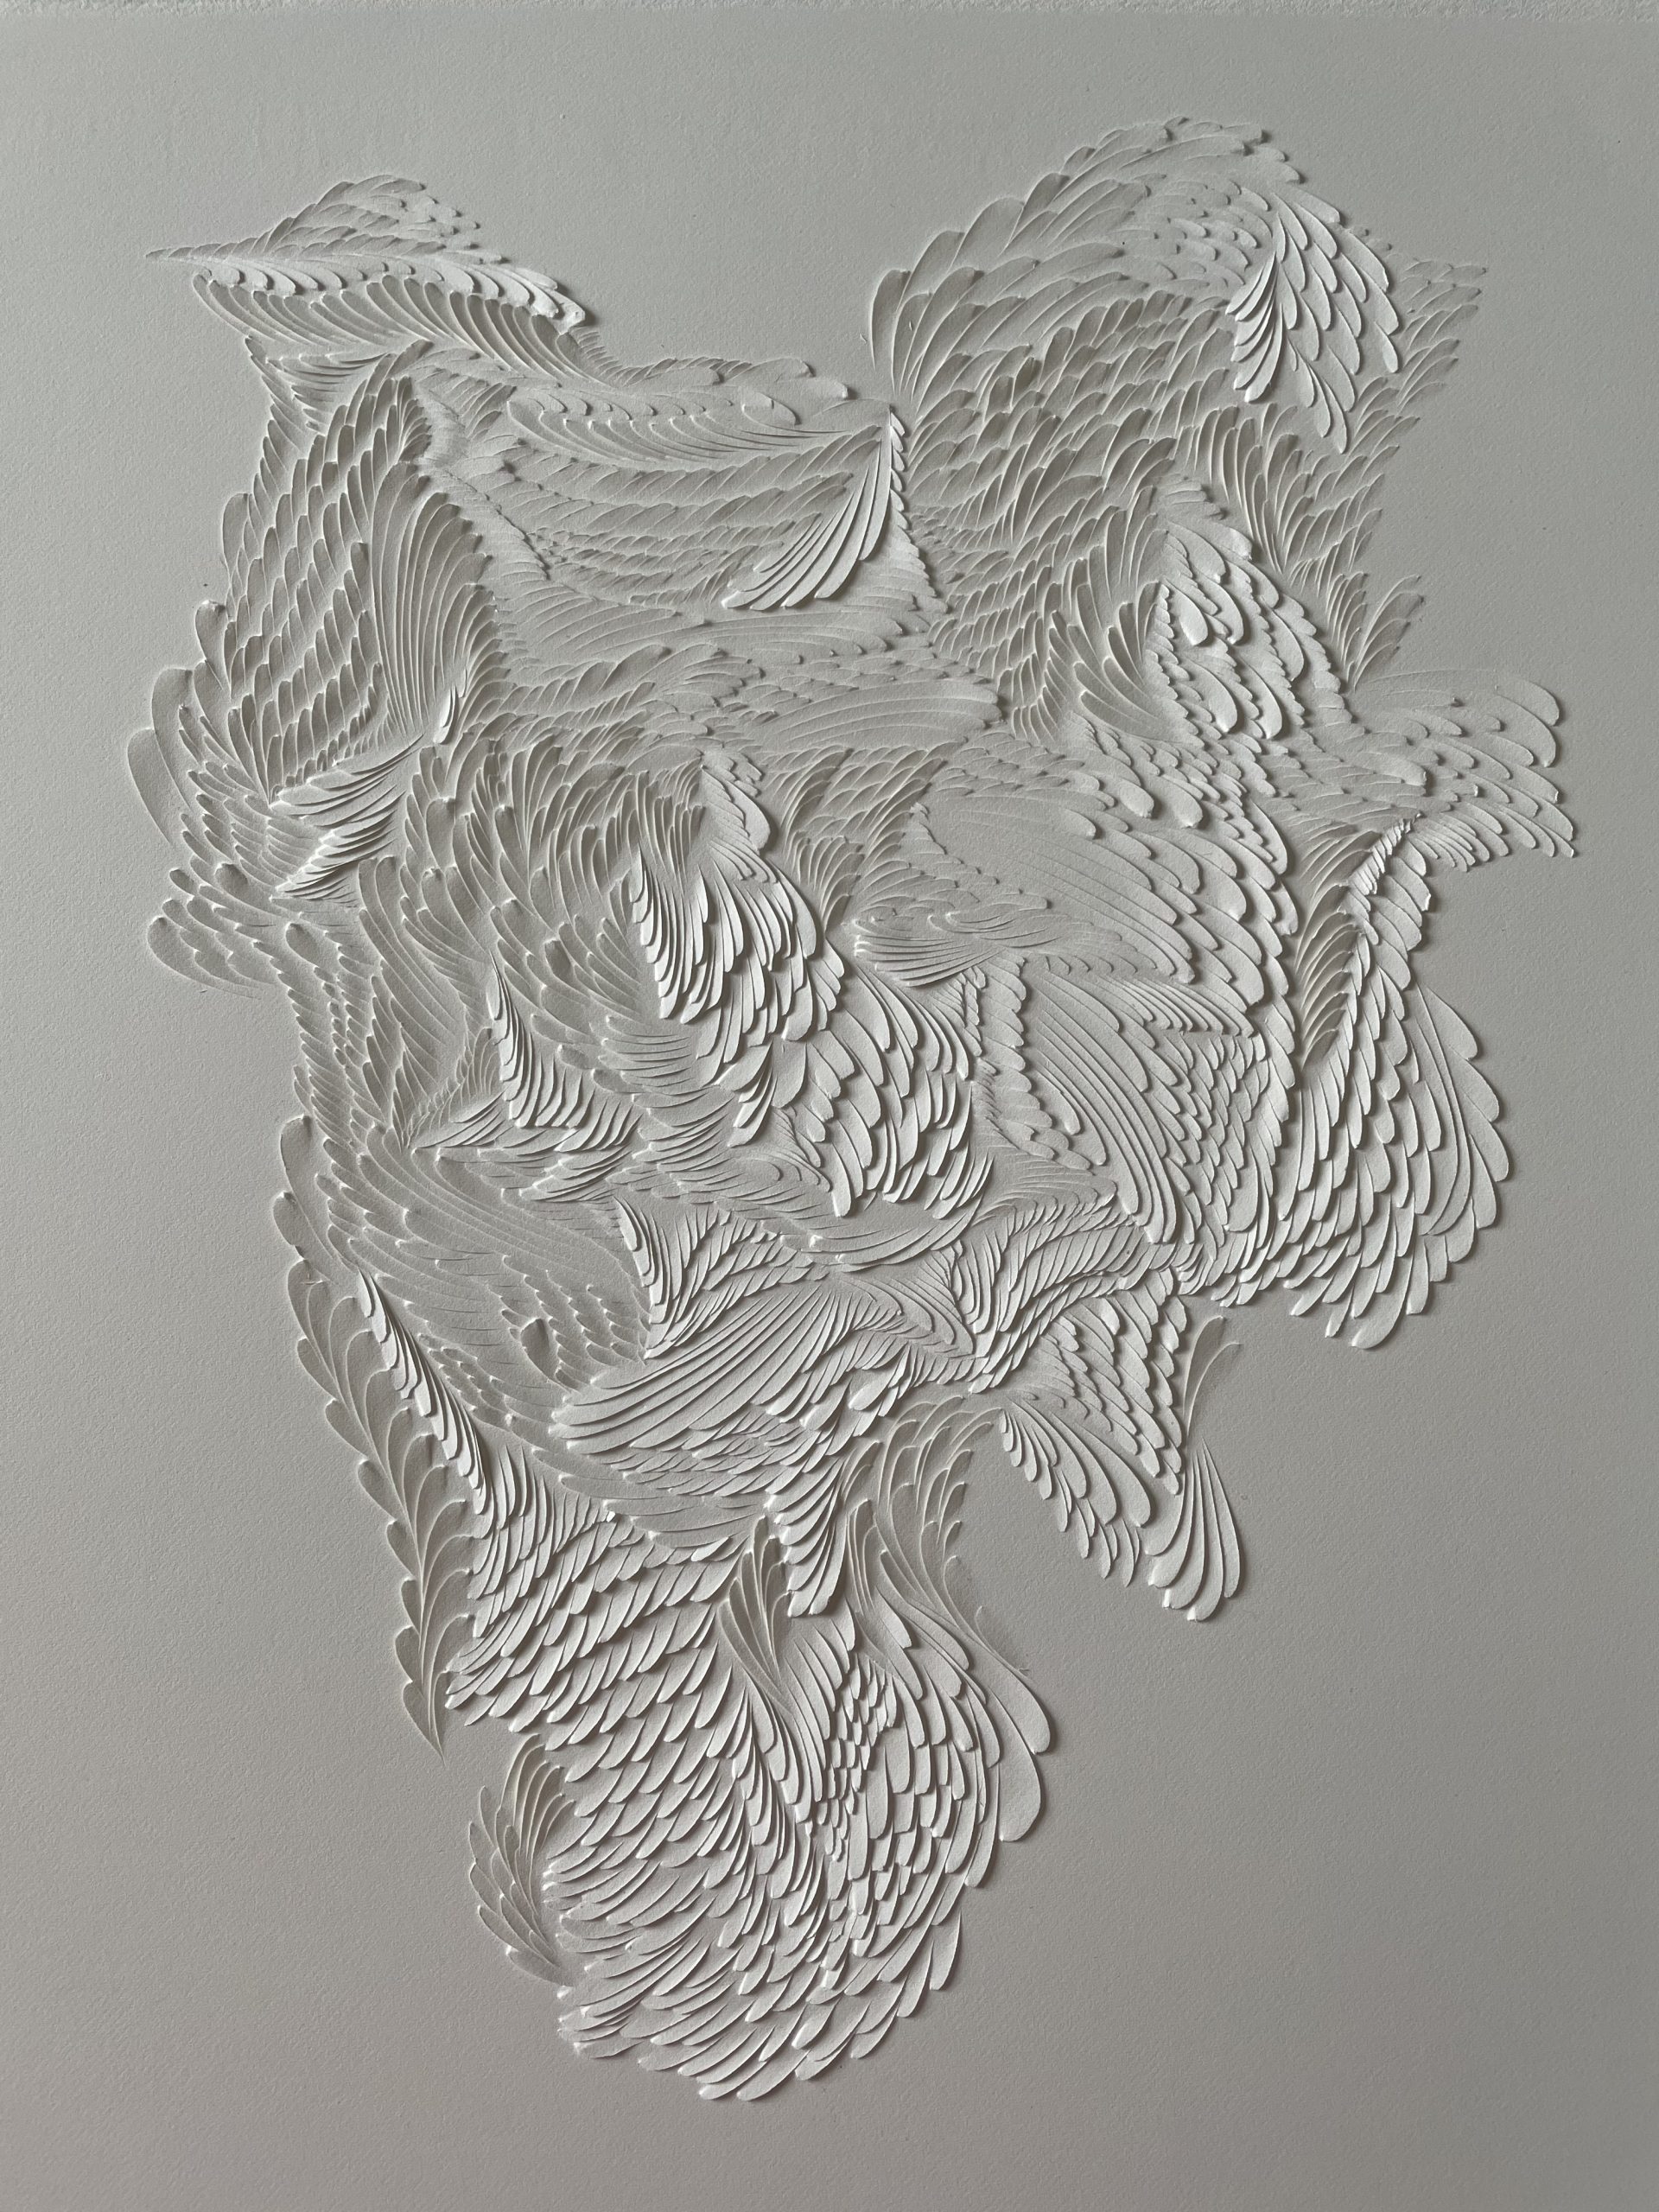 Animal skull | rytina na papieri, 35x28cm, 2021